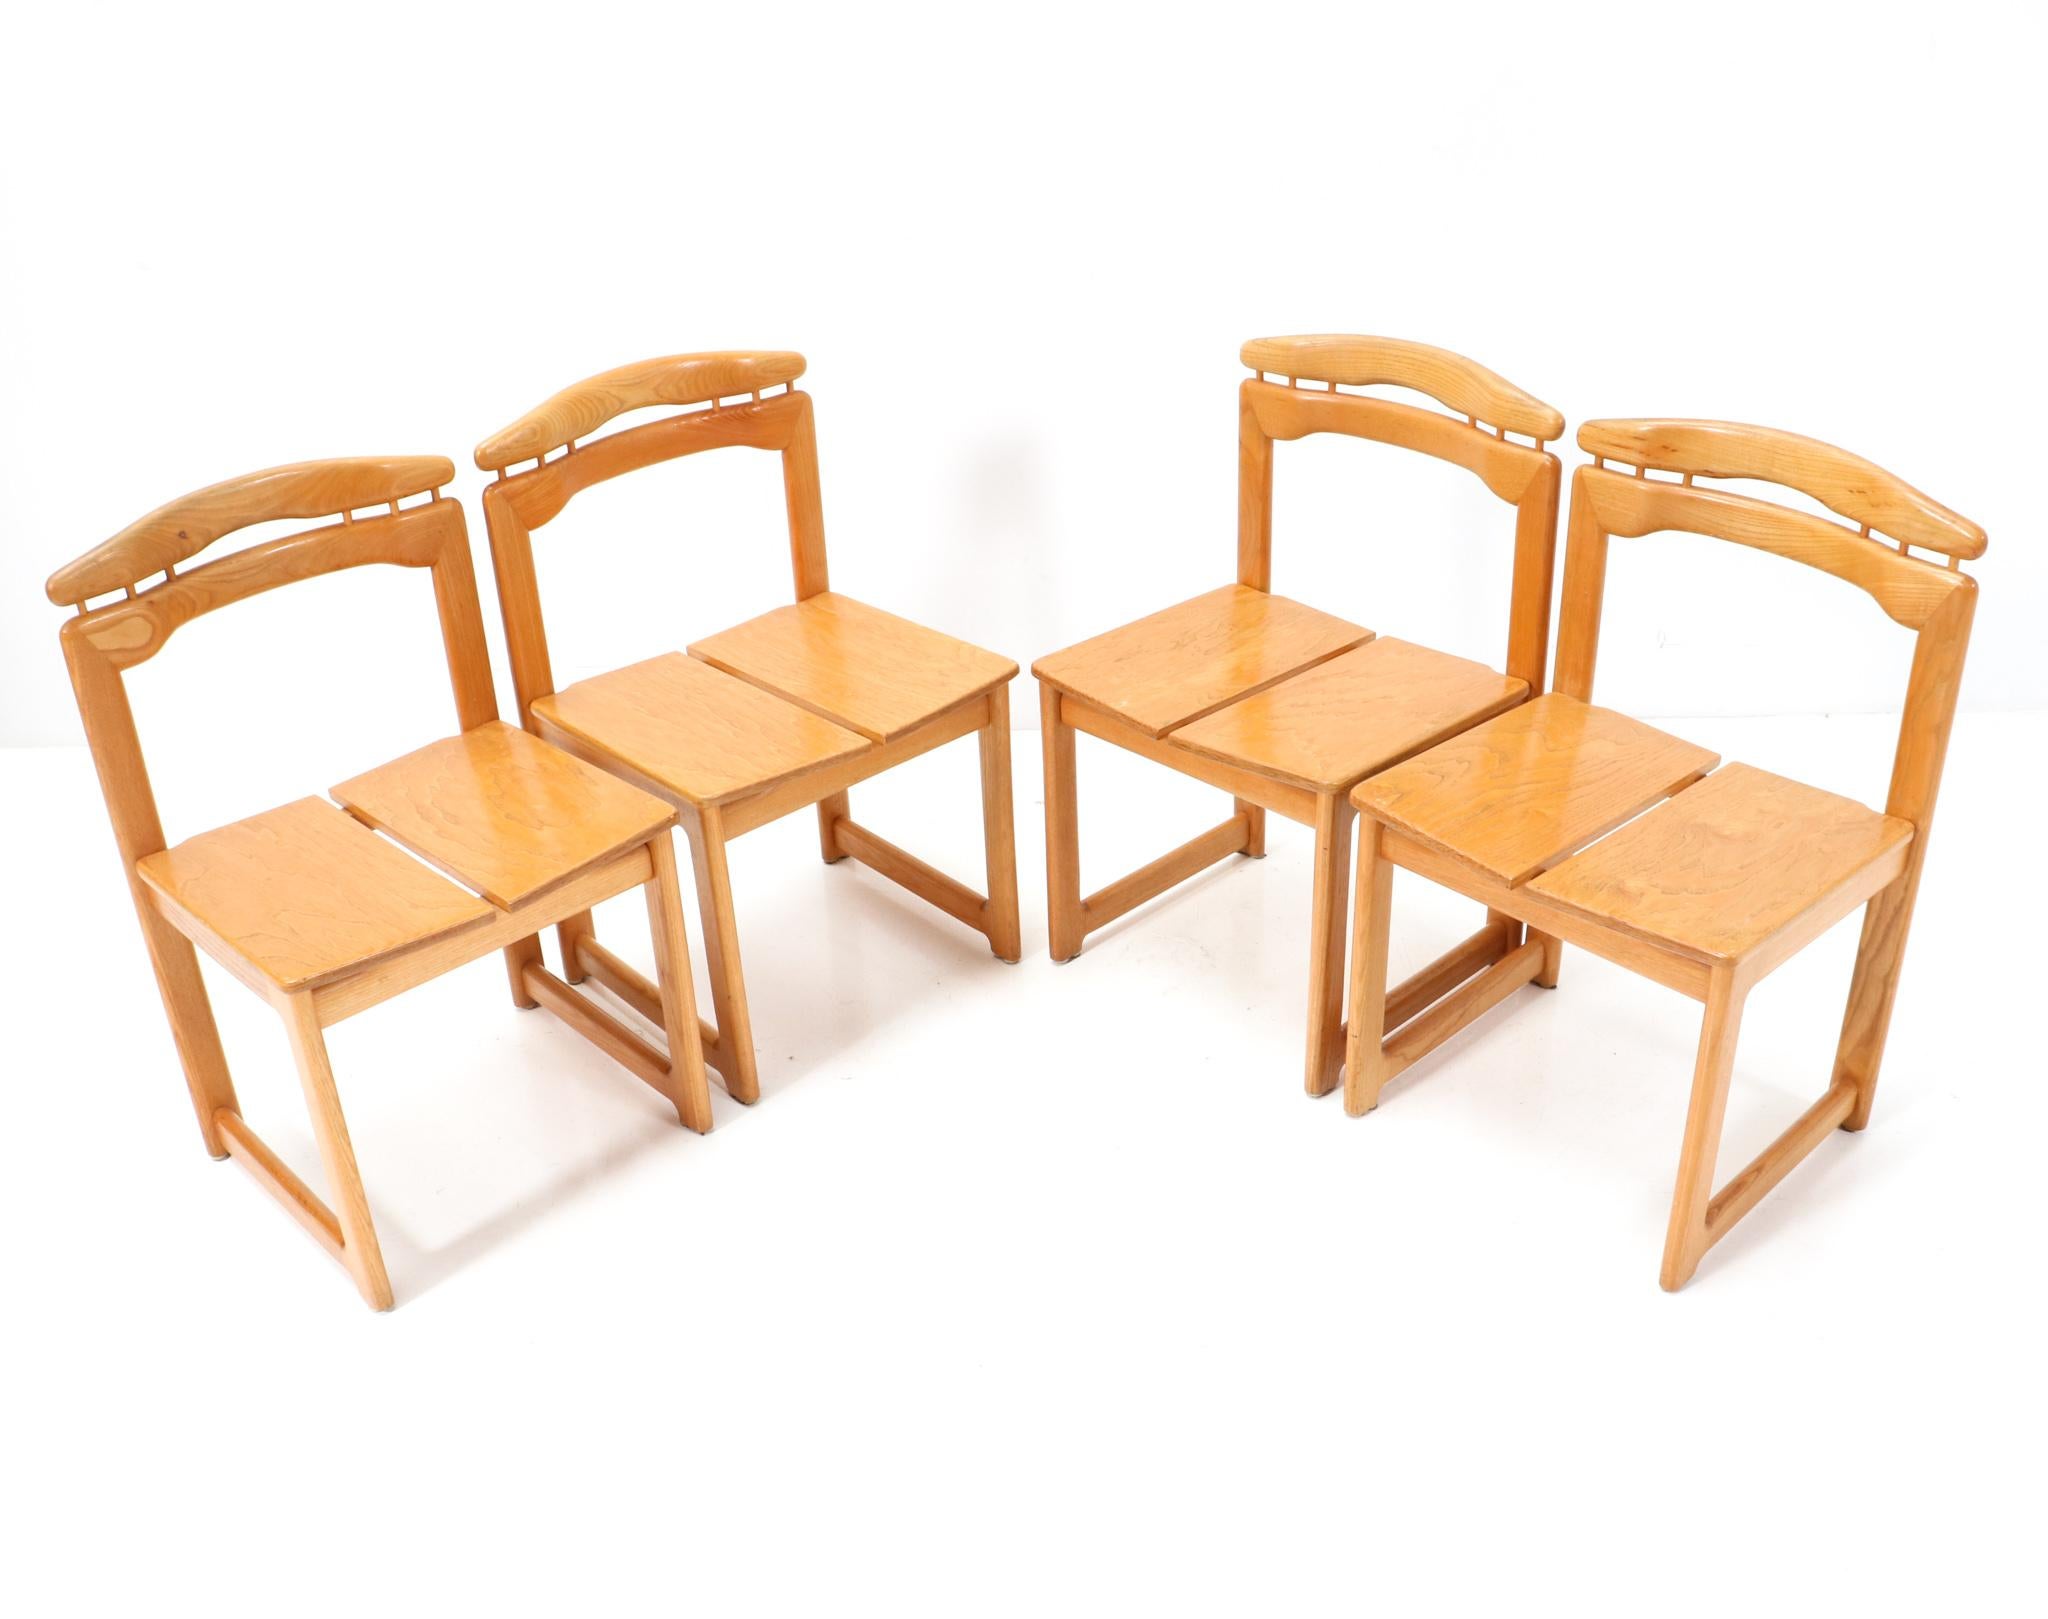 Four Ash Italian Mid-Century Modern Tapiovaara Style Chairs, 1970s For Sale 1